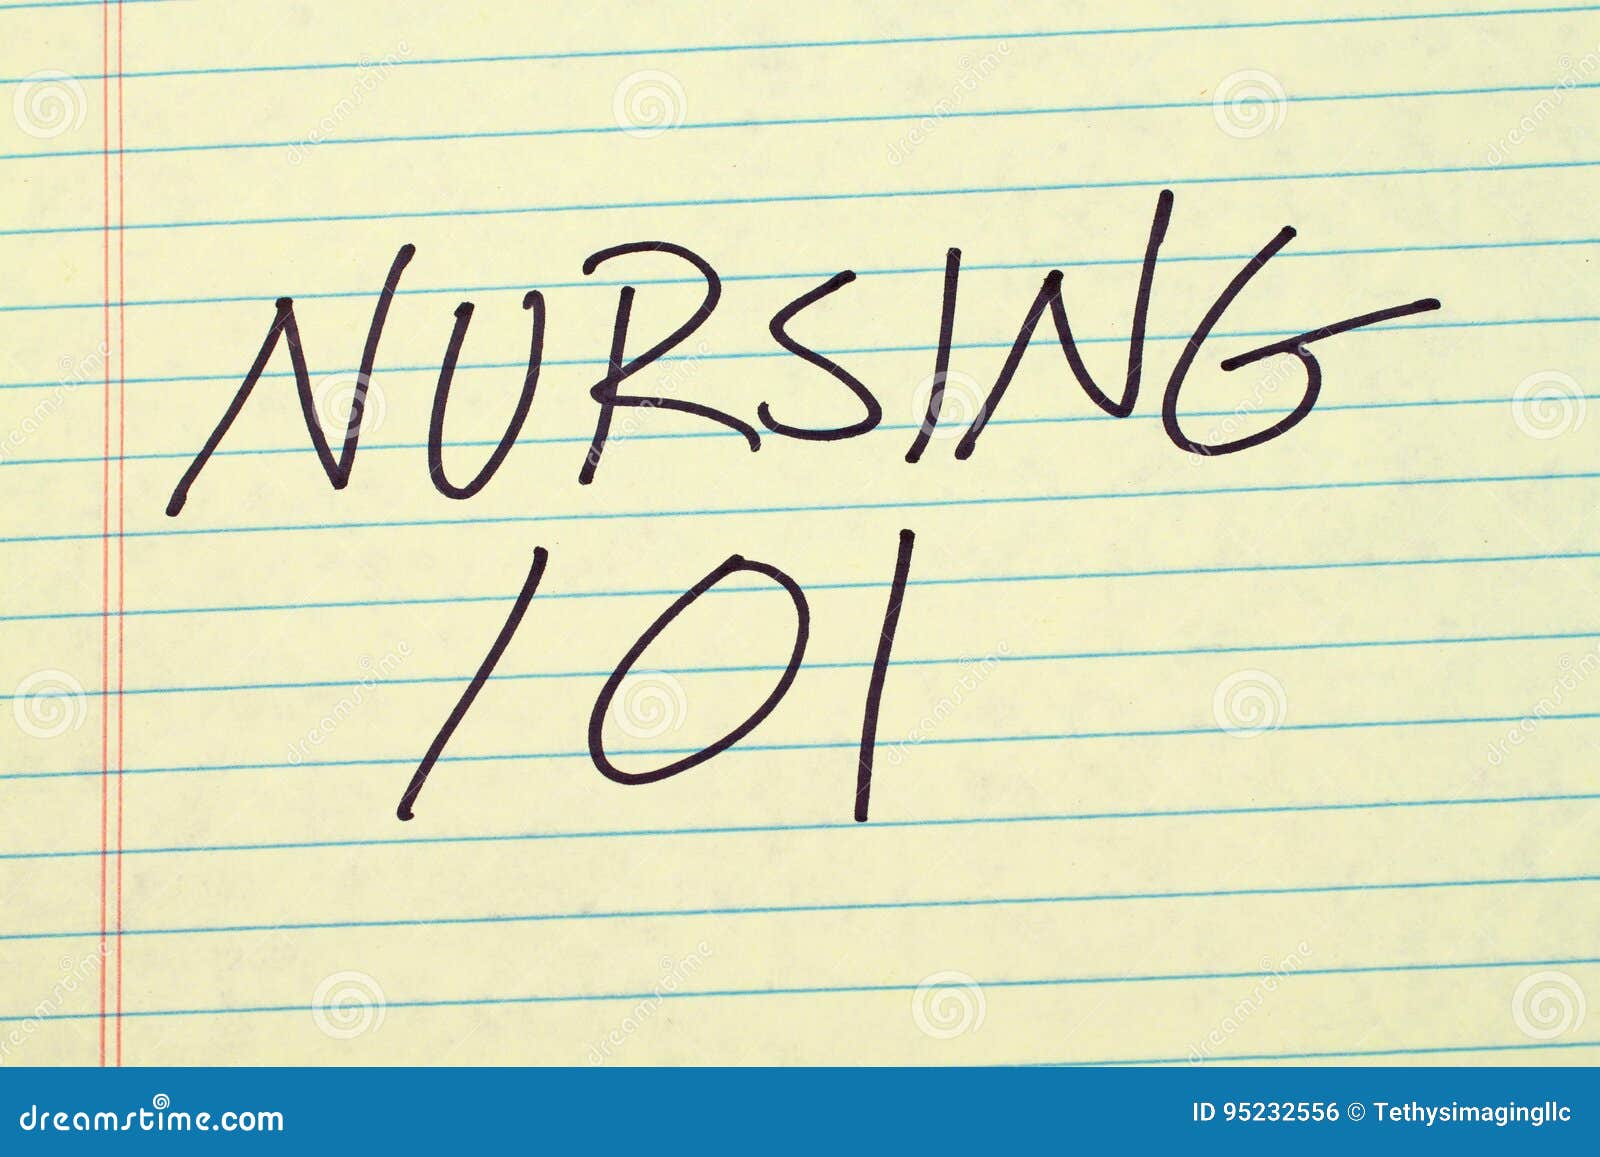 nursing 101 on a yellow legal pad